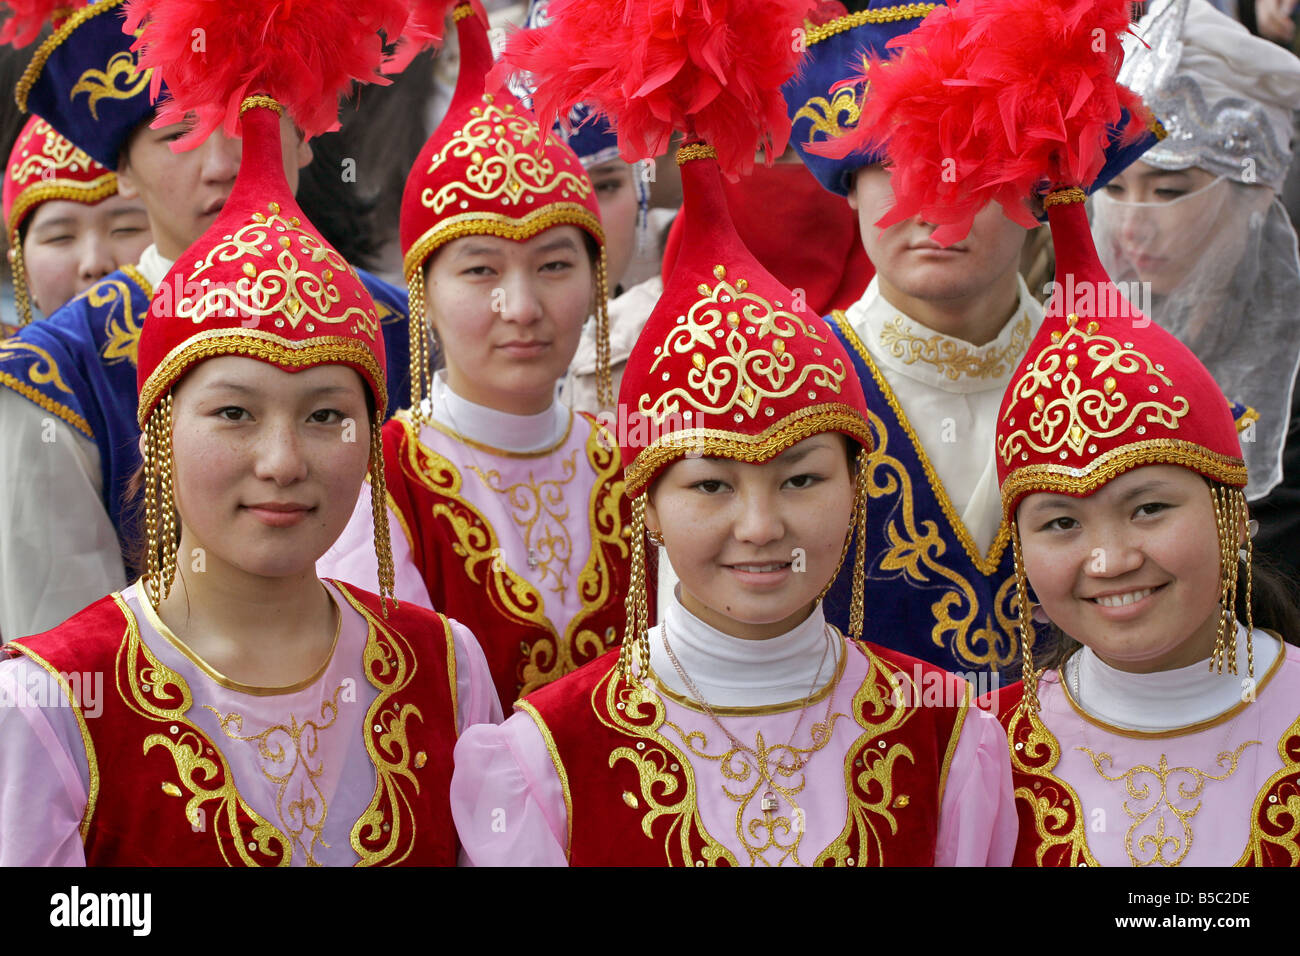 young-kazakh-girls-in-national-dress-kazakhstan-B5C2DE.jpg